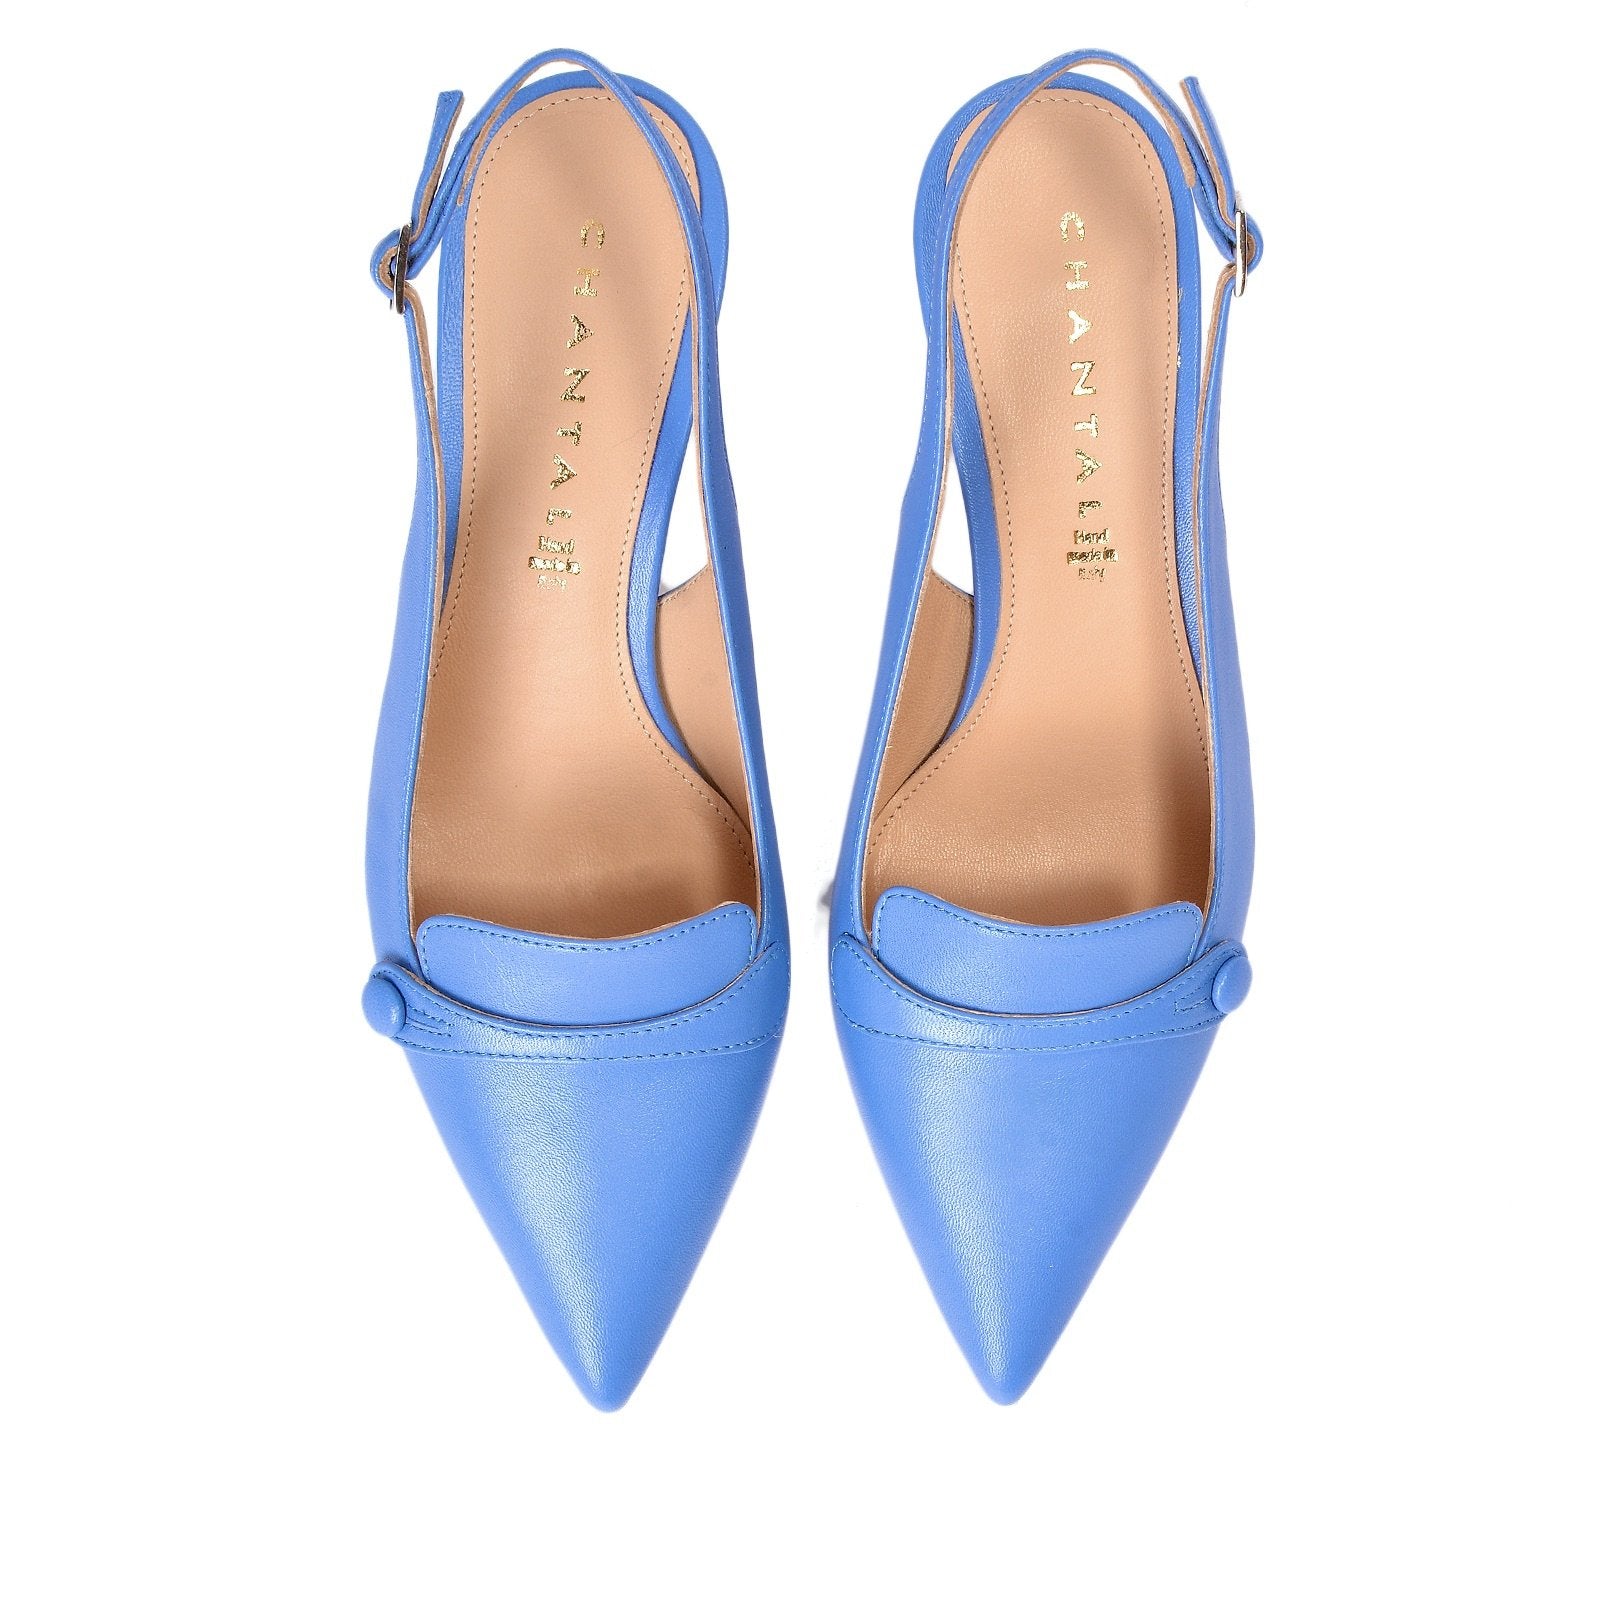 Chiffon Sling Back Shoes In Light Blue Heels 1002/Blue - 9